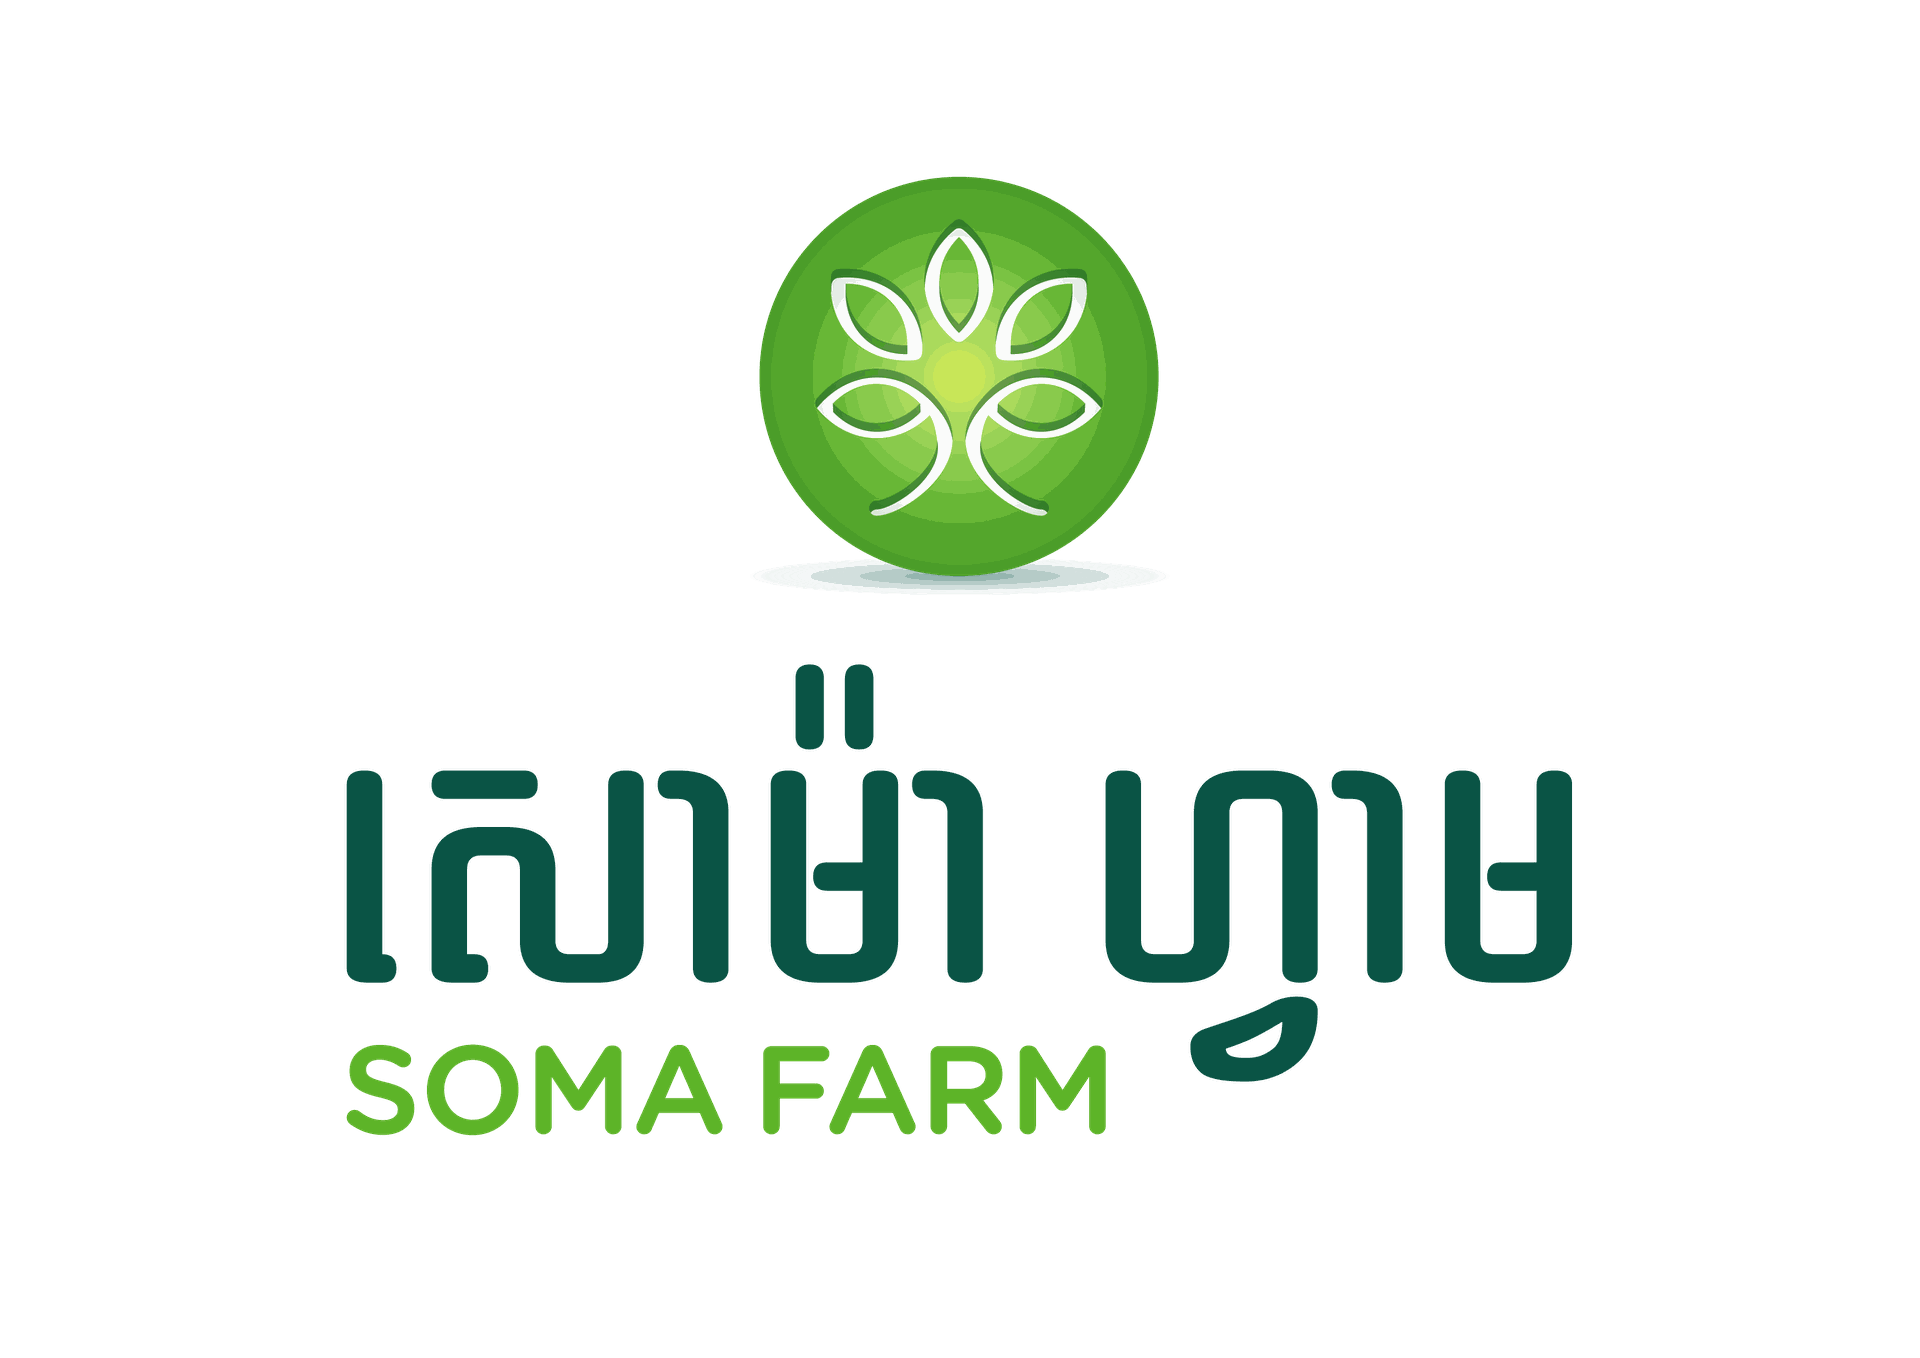 SOMA FARM